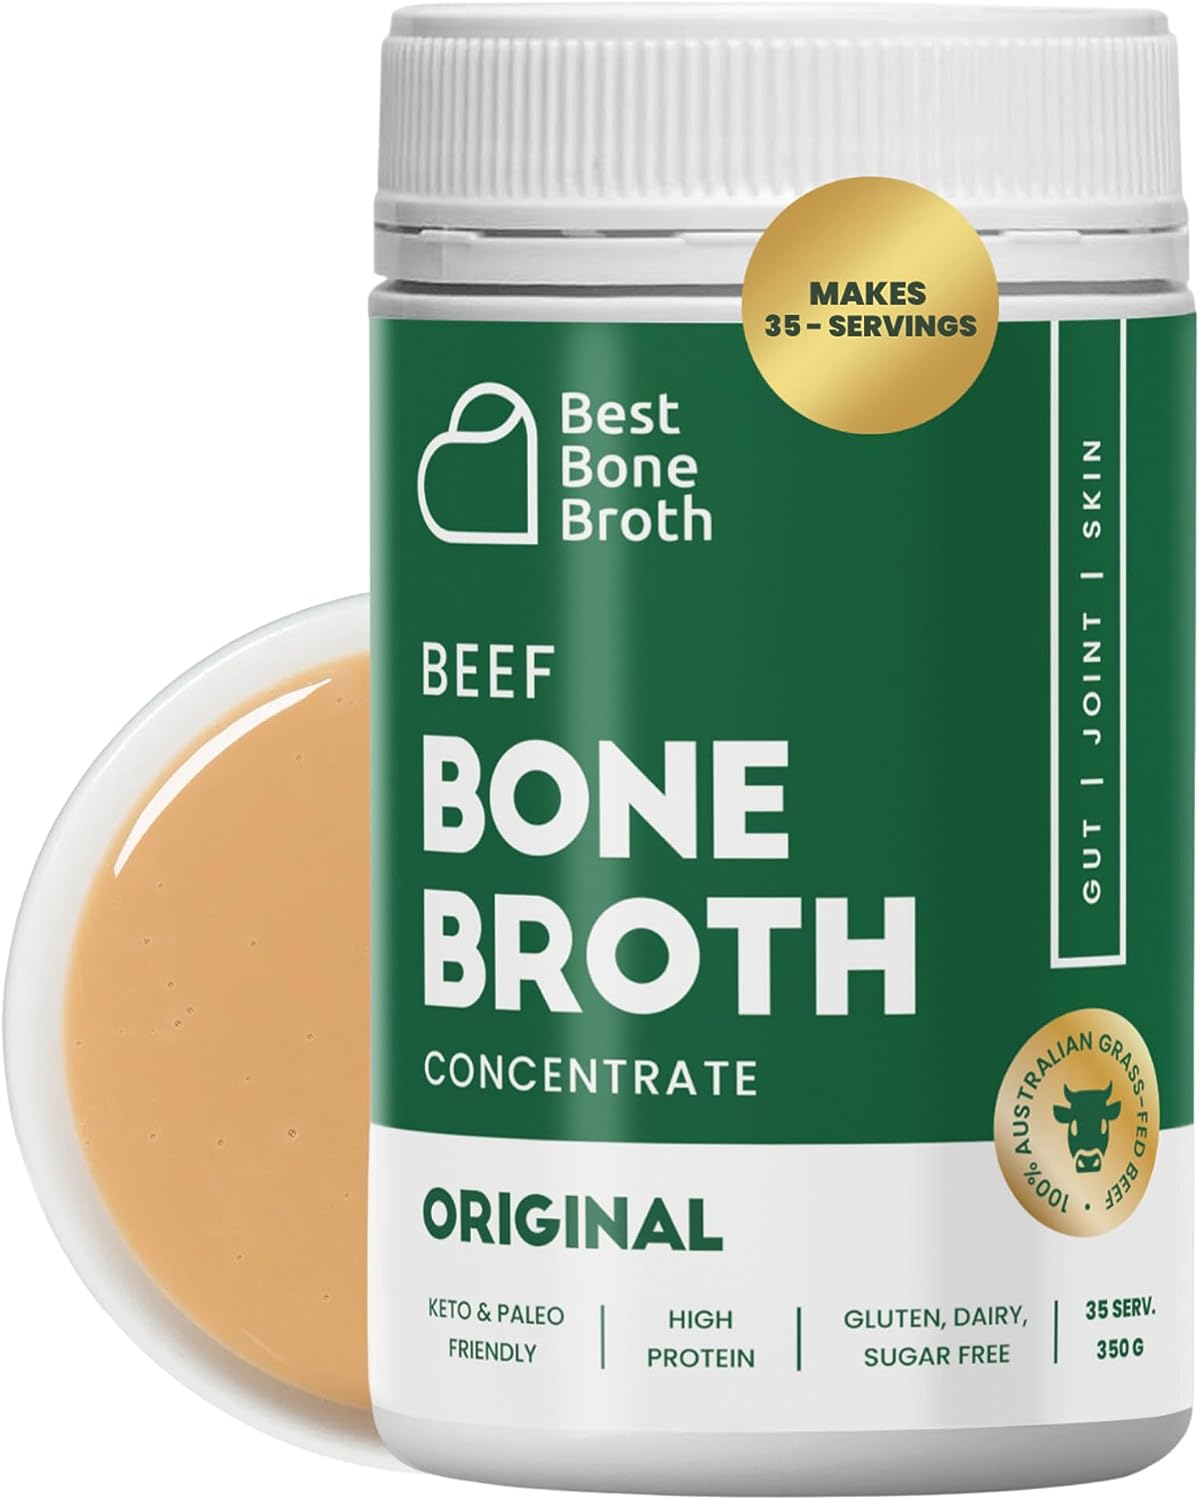 Best Bone Broth - Beef Bone Broth Concentrate